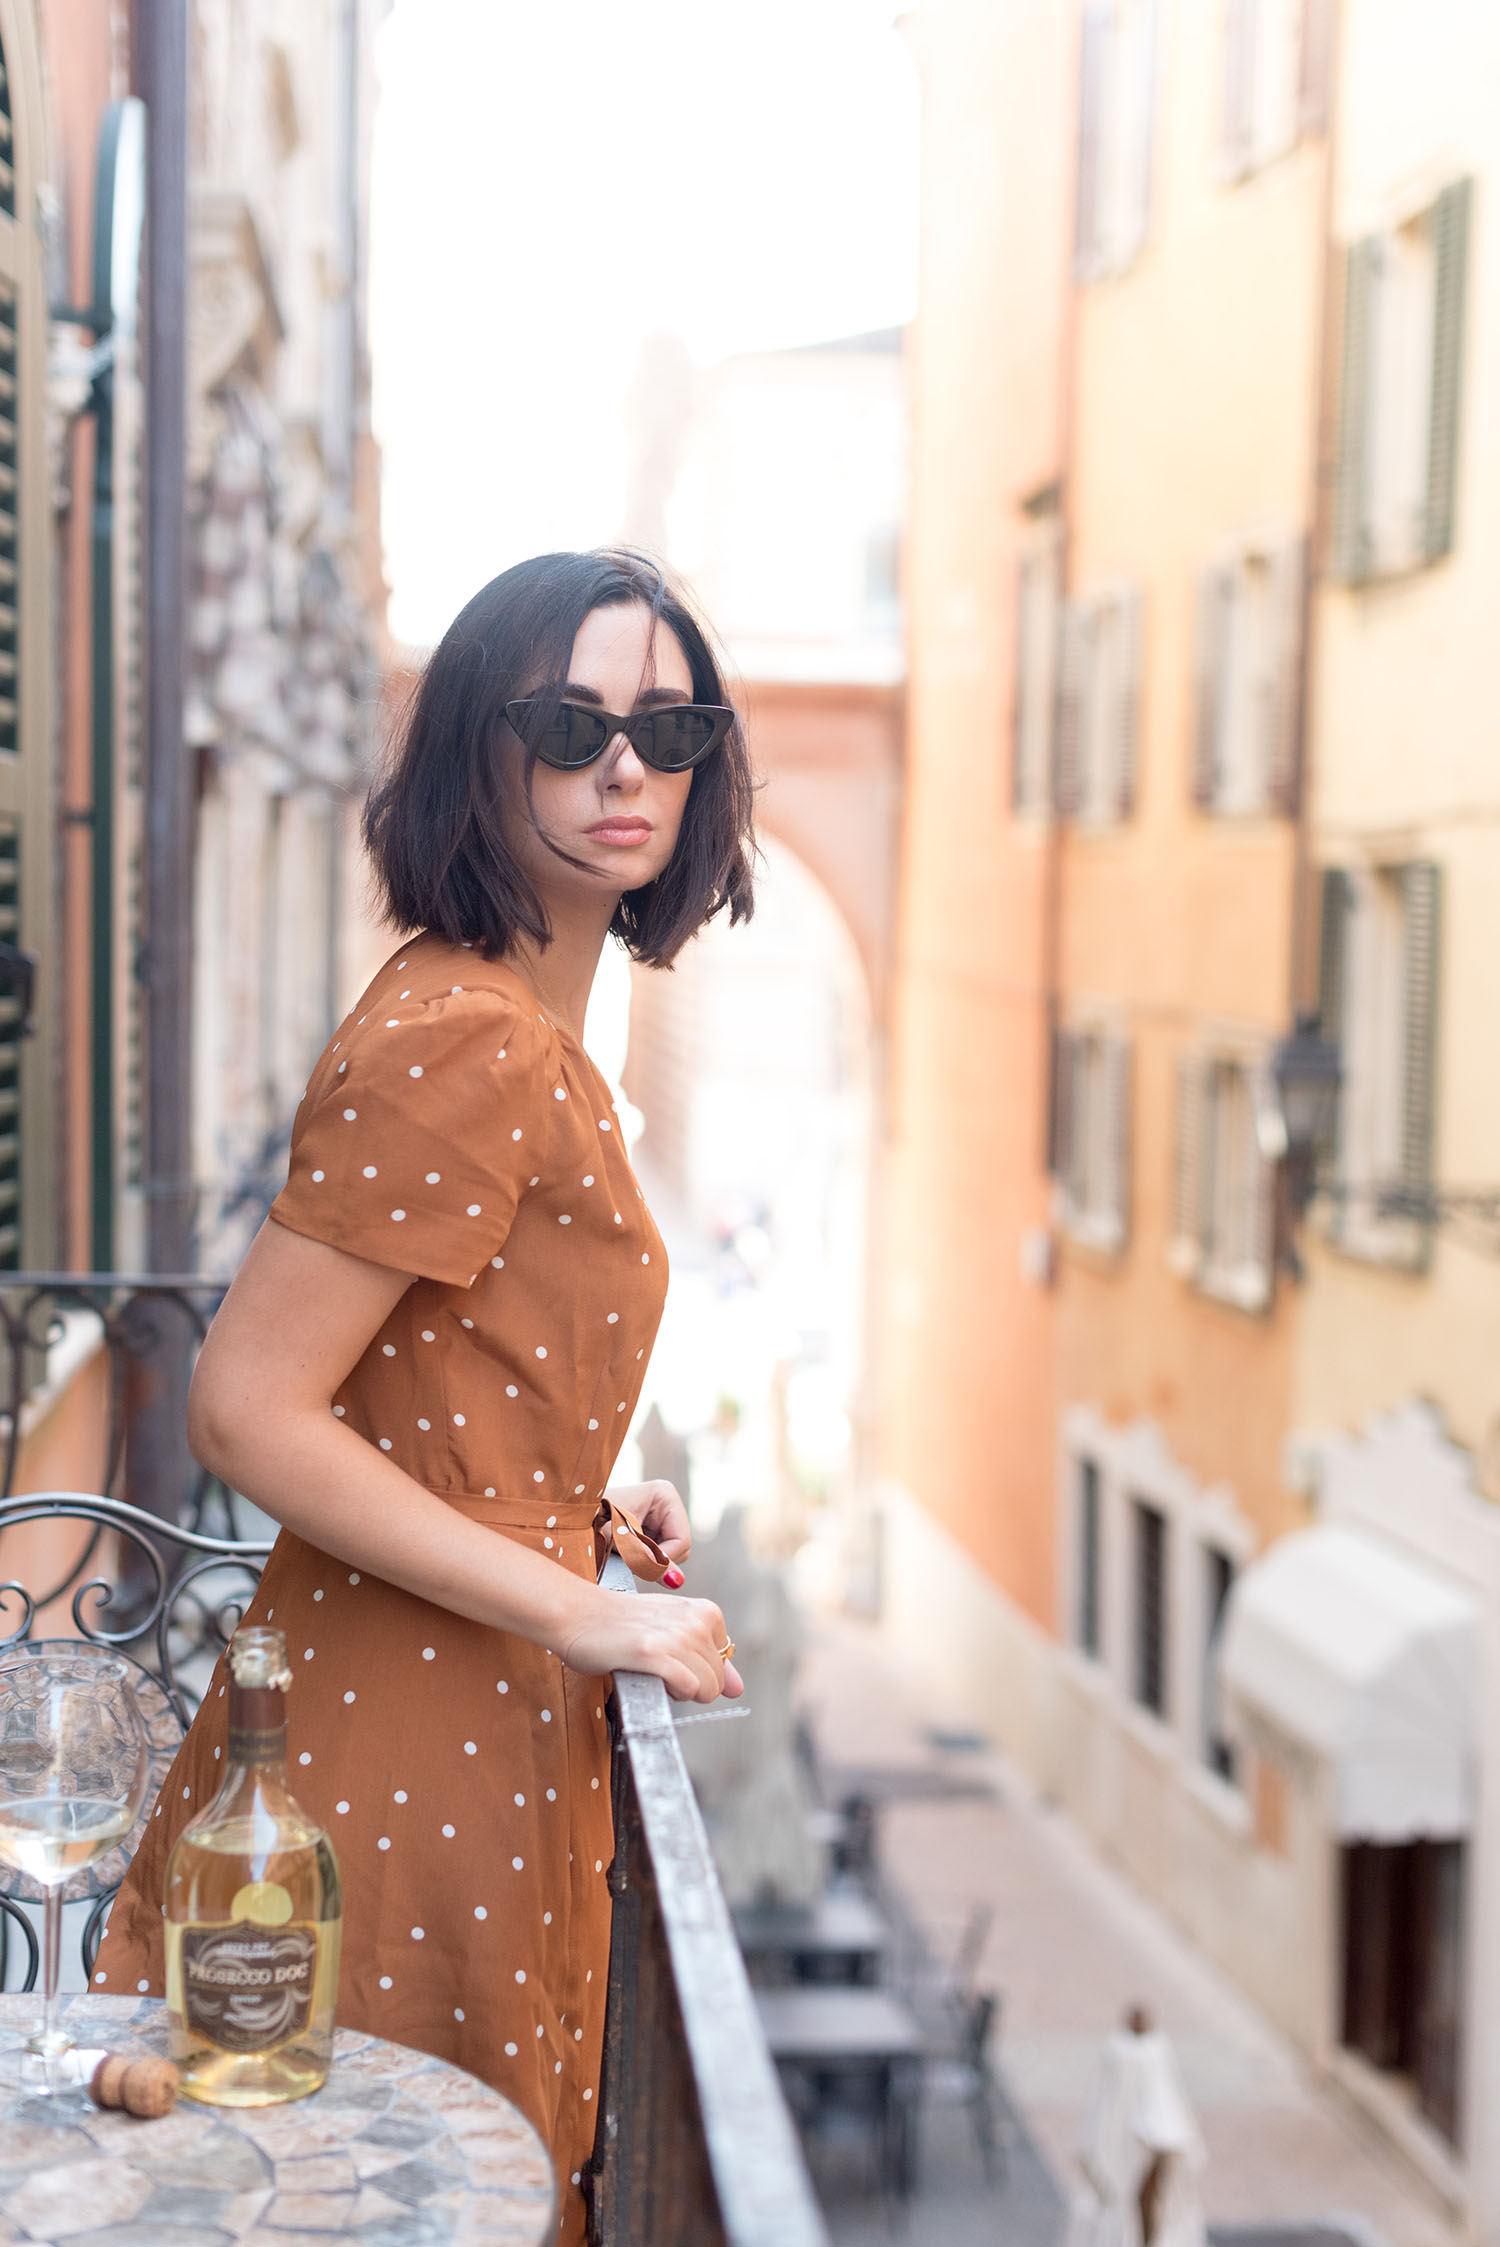 Top Winnipeg fashion blogger Cee Fardoe of Coco & Vera stands on a balcony in Verona, Italy, wearing a Sezane polkadot dress and Zara cat eye sunglasses